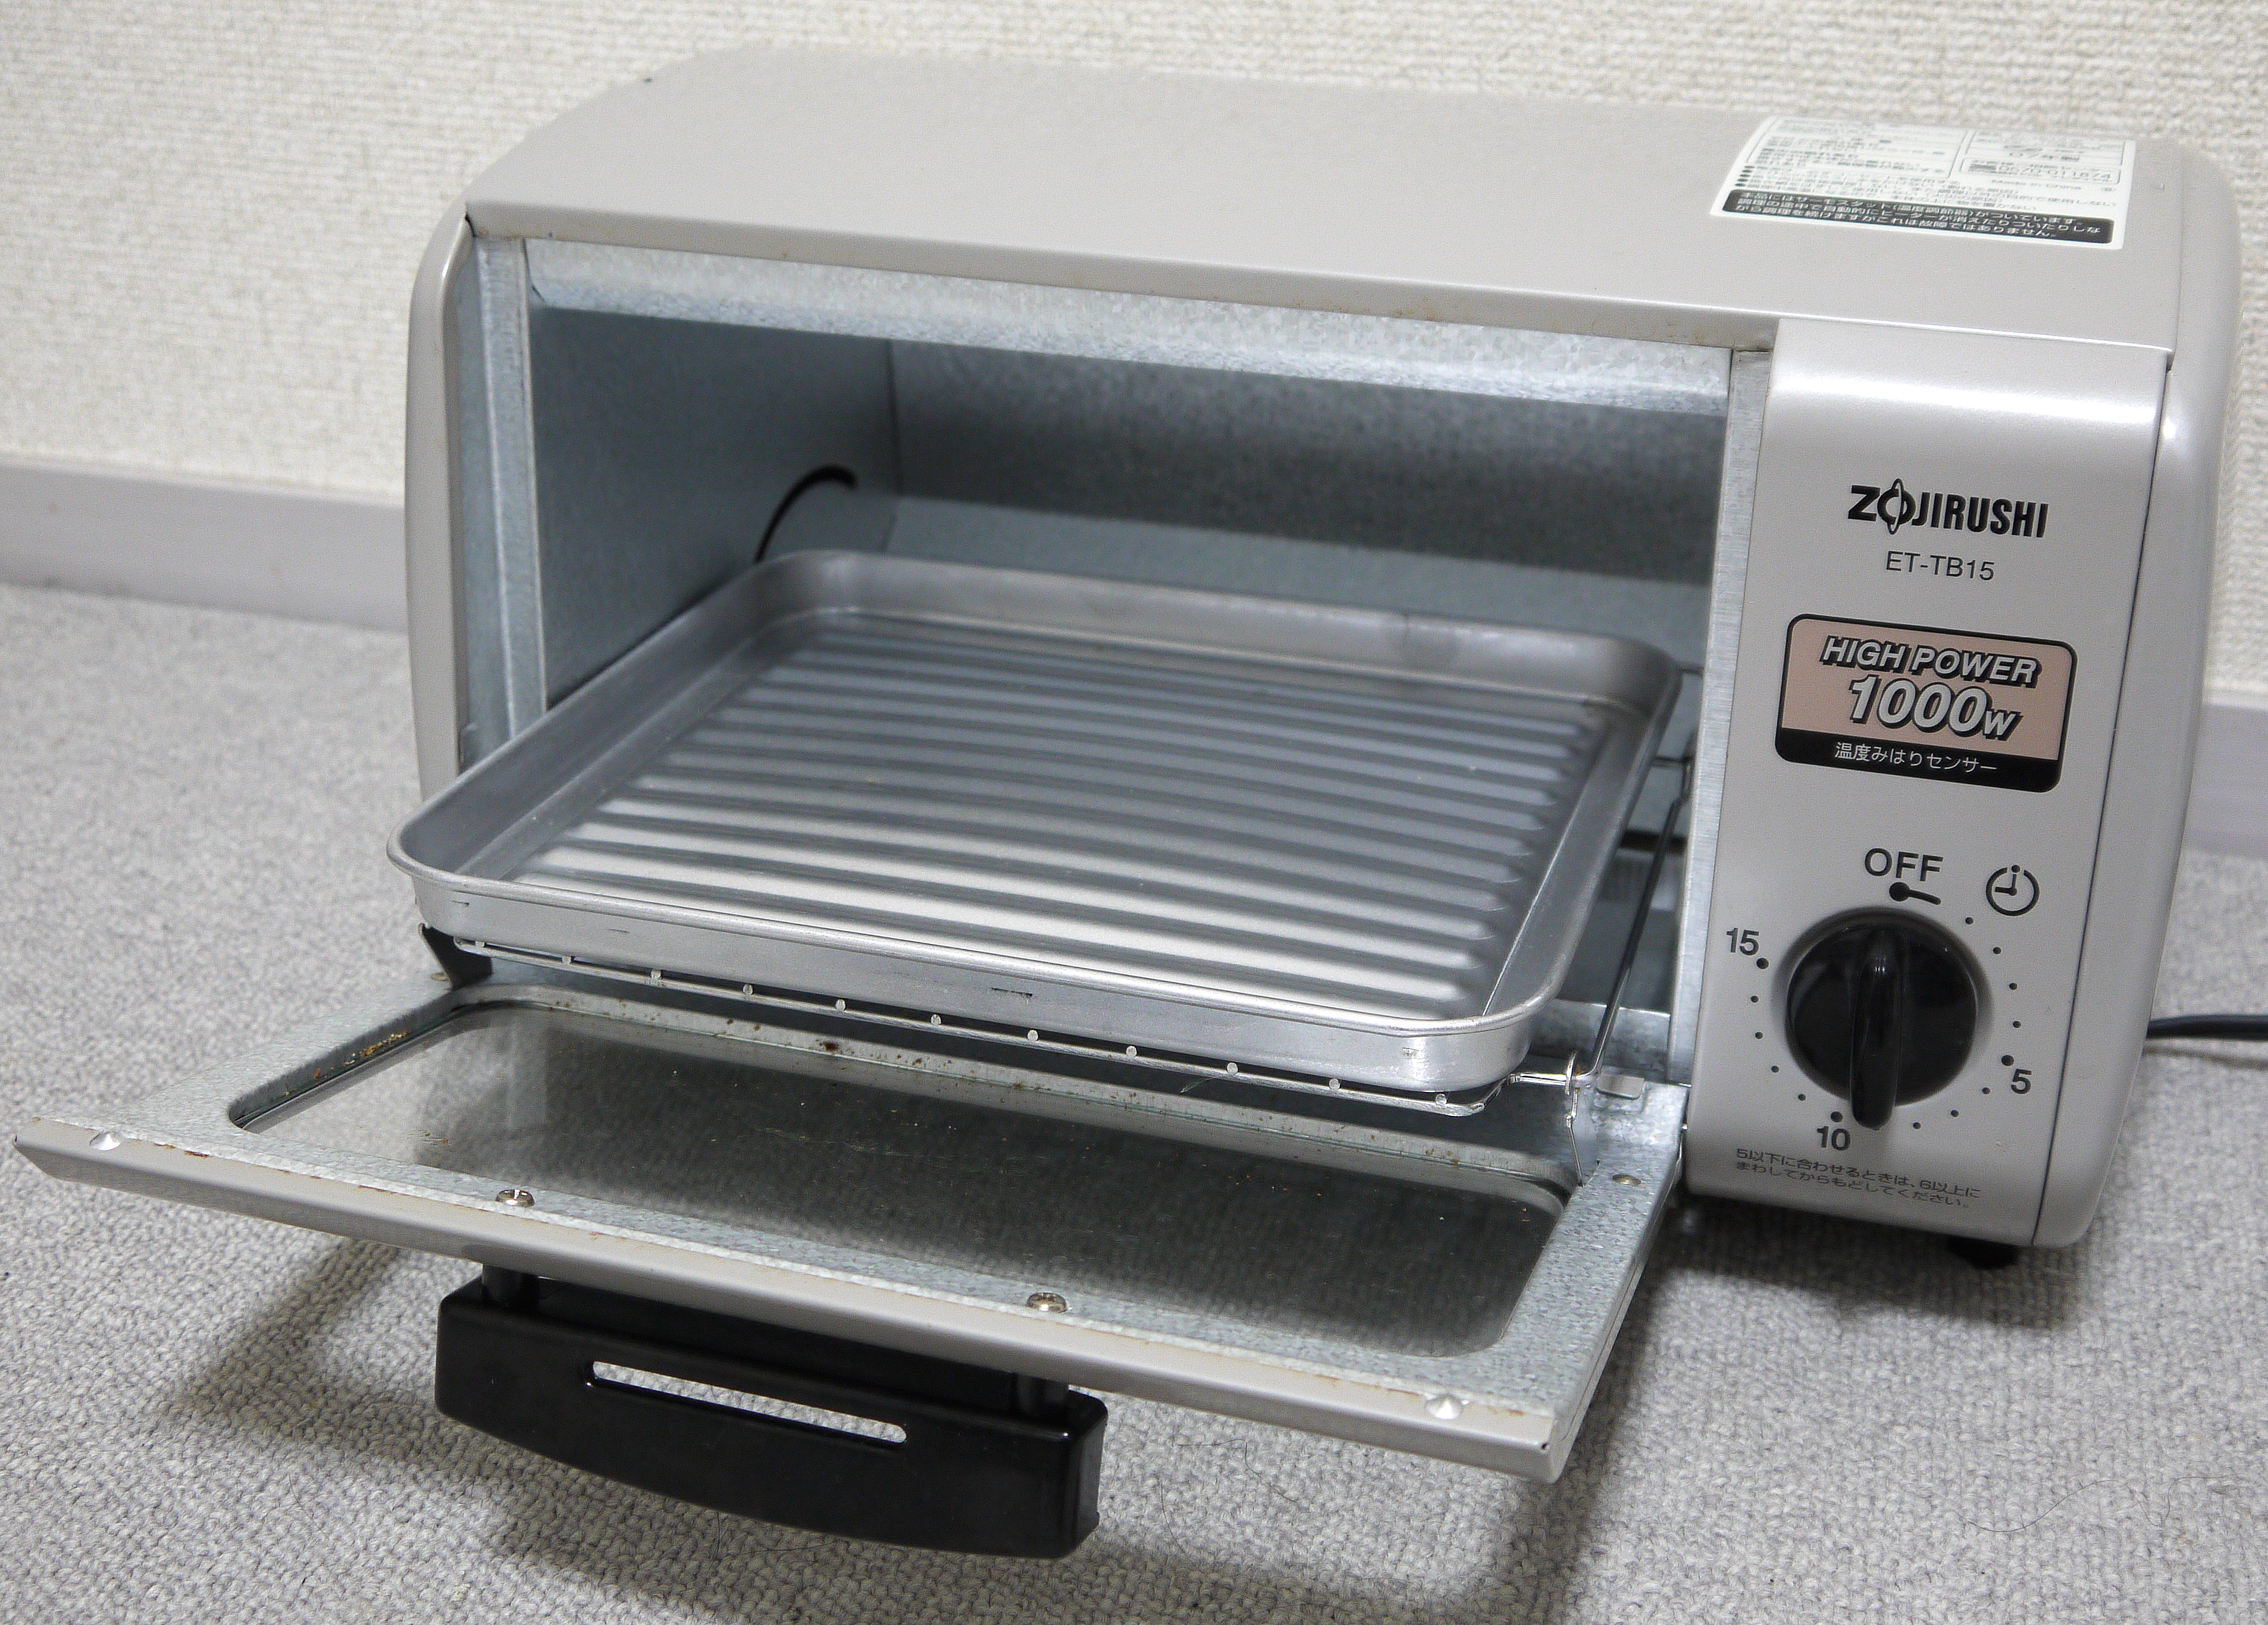 https://upload.wikimedia.org/wikipedia/commons/6/68/Zojirushi_toaster_oven_ET-TB15_2.jpg